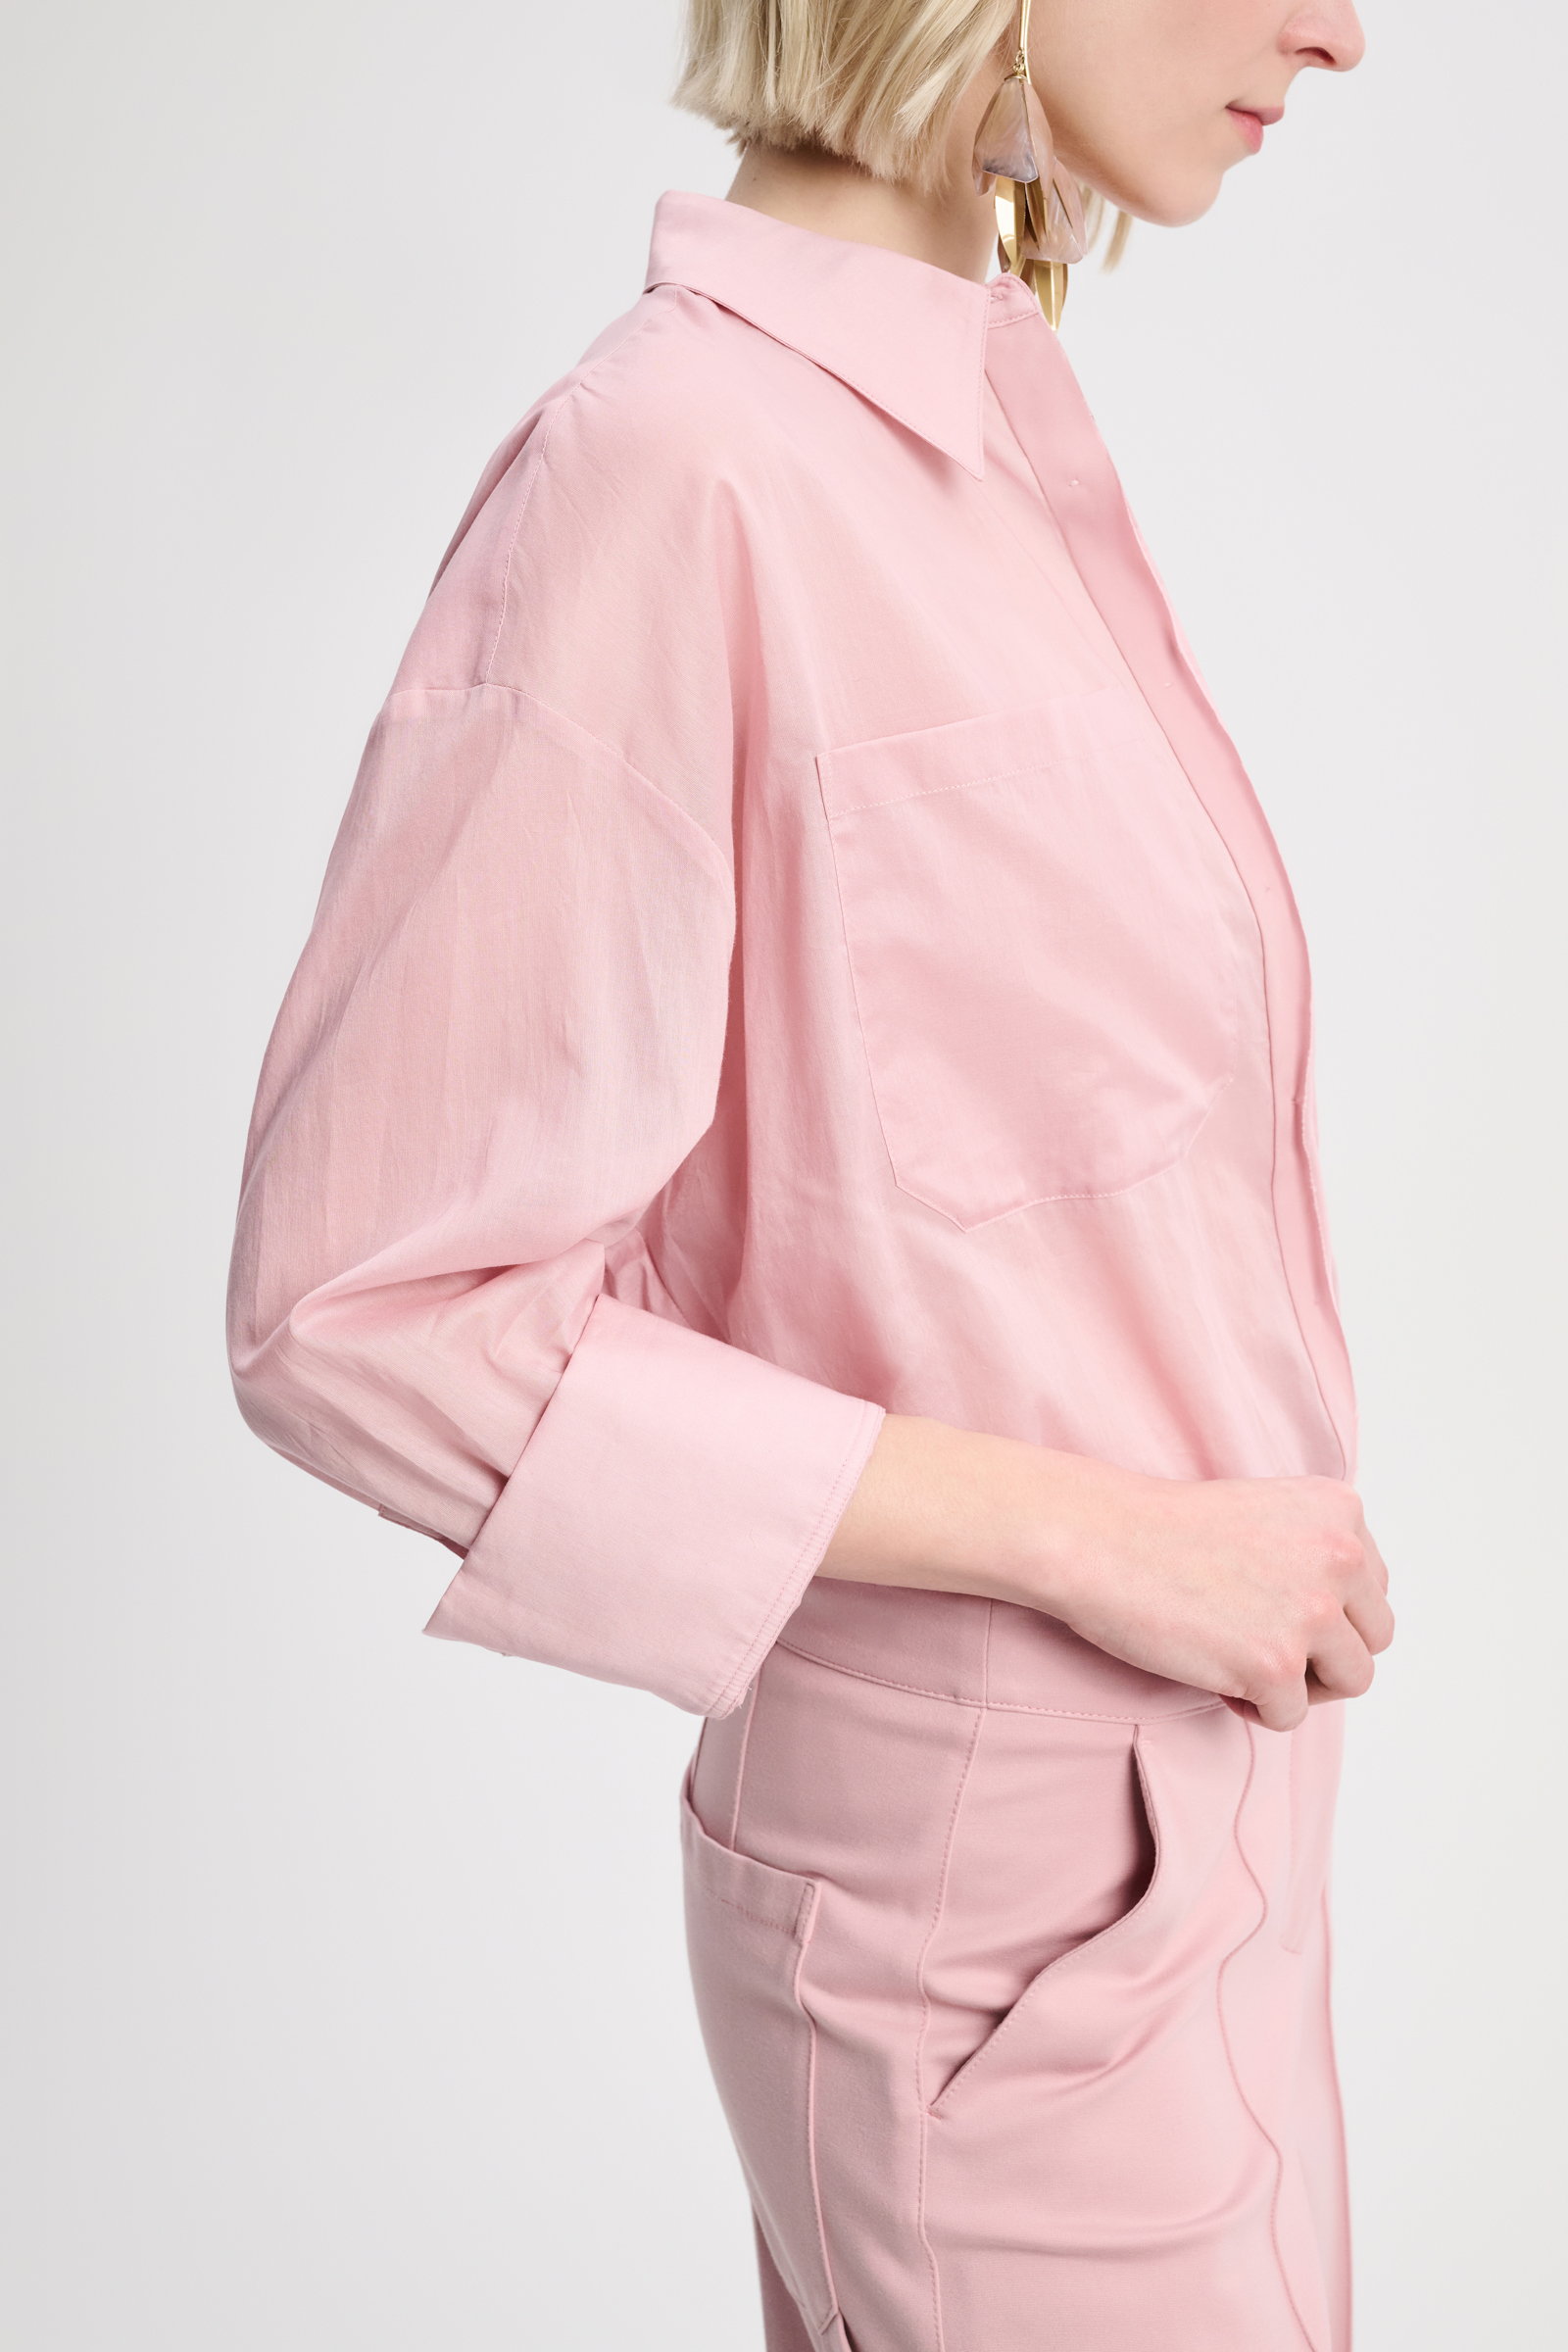 Dorothee Schumacher Oversized Bluse aus Cotton Voile light rose